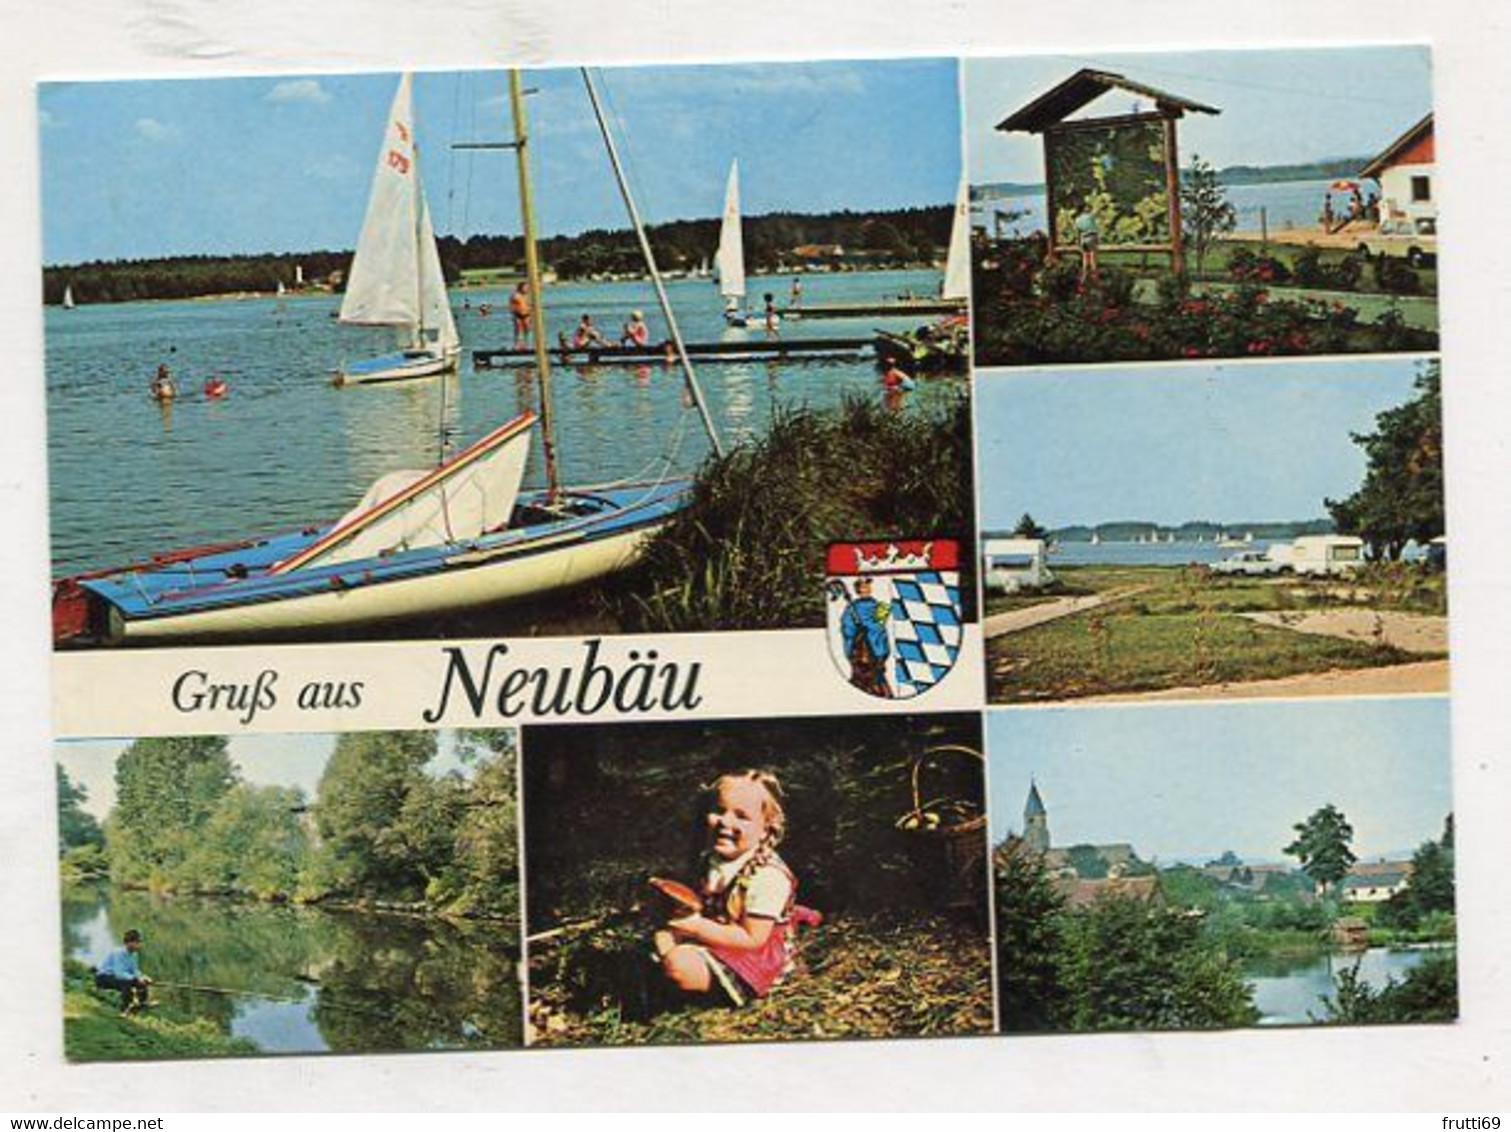 AK 044470 GERMANY - Neubäu - ADAC-Erholungspark Naturpark - Roding